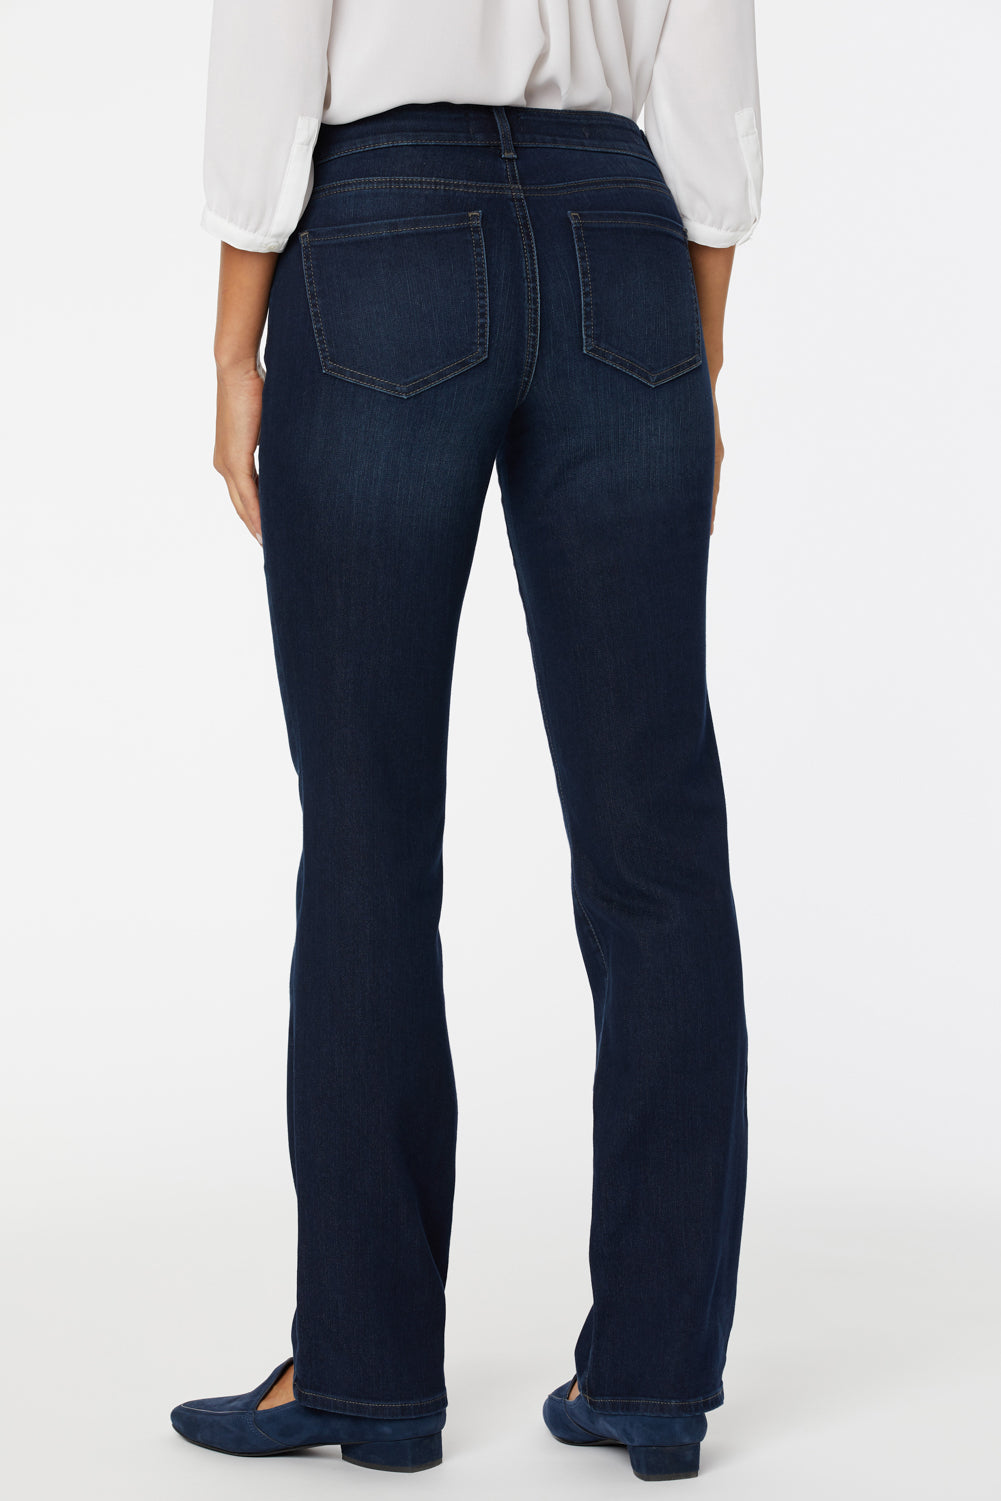 NYDJ Marilyn Straight Jeans  - Burbank Wash